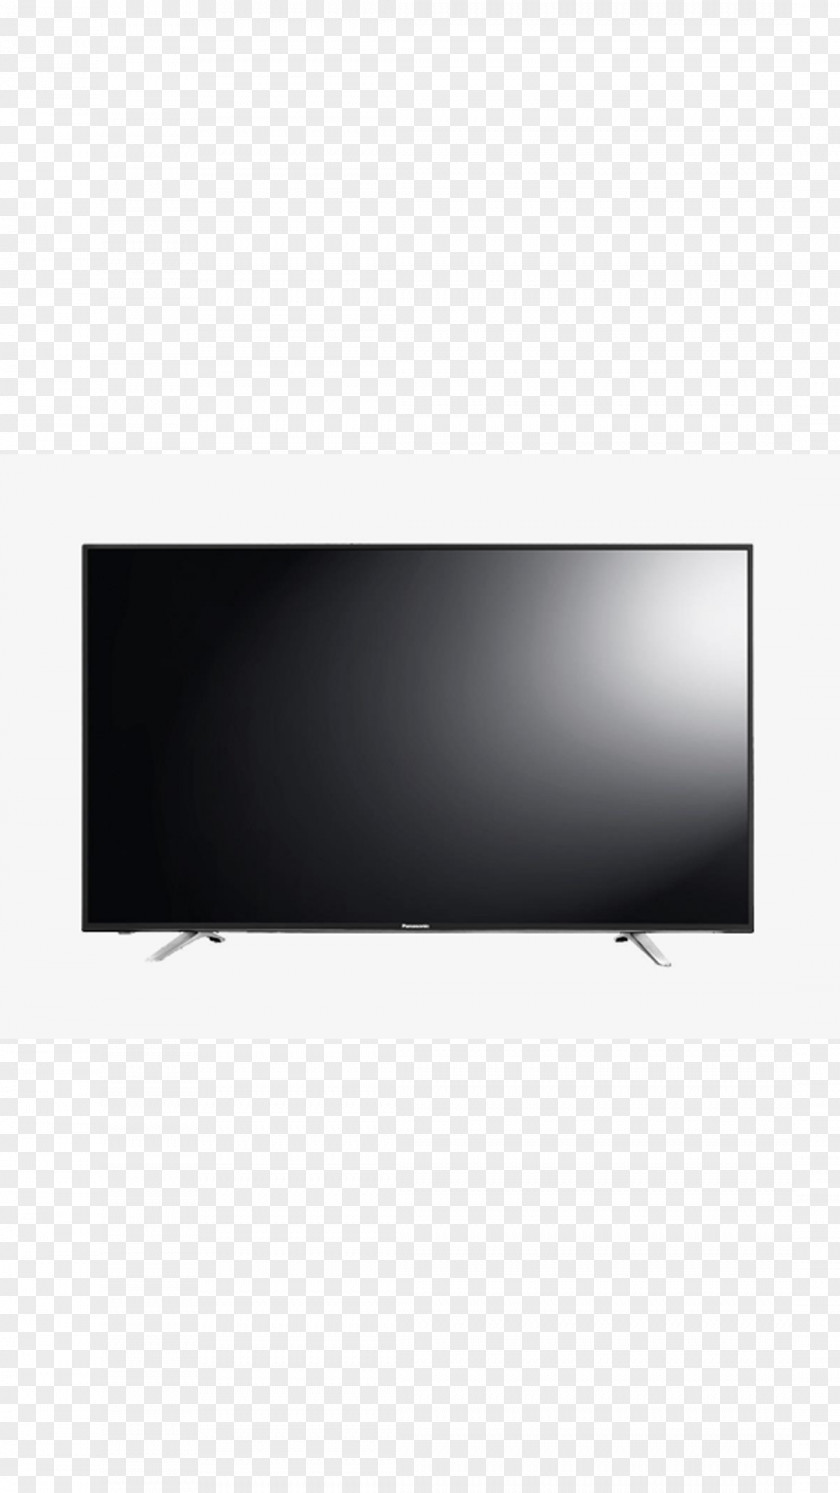 Led Tv Laptop Computer Monitors Television Display Device Flat Panel PNG